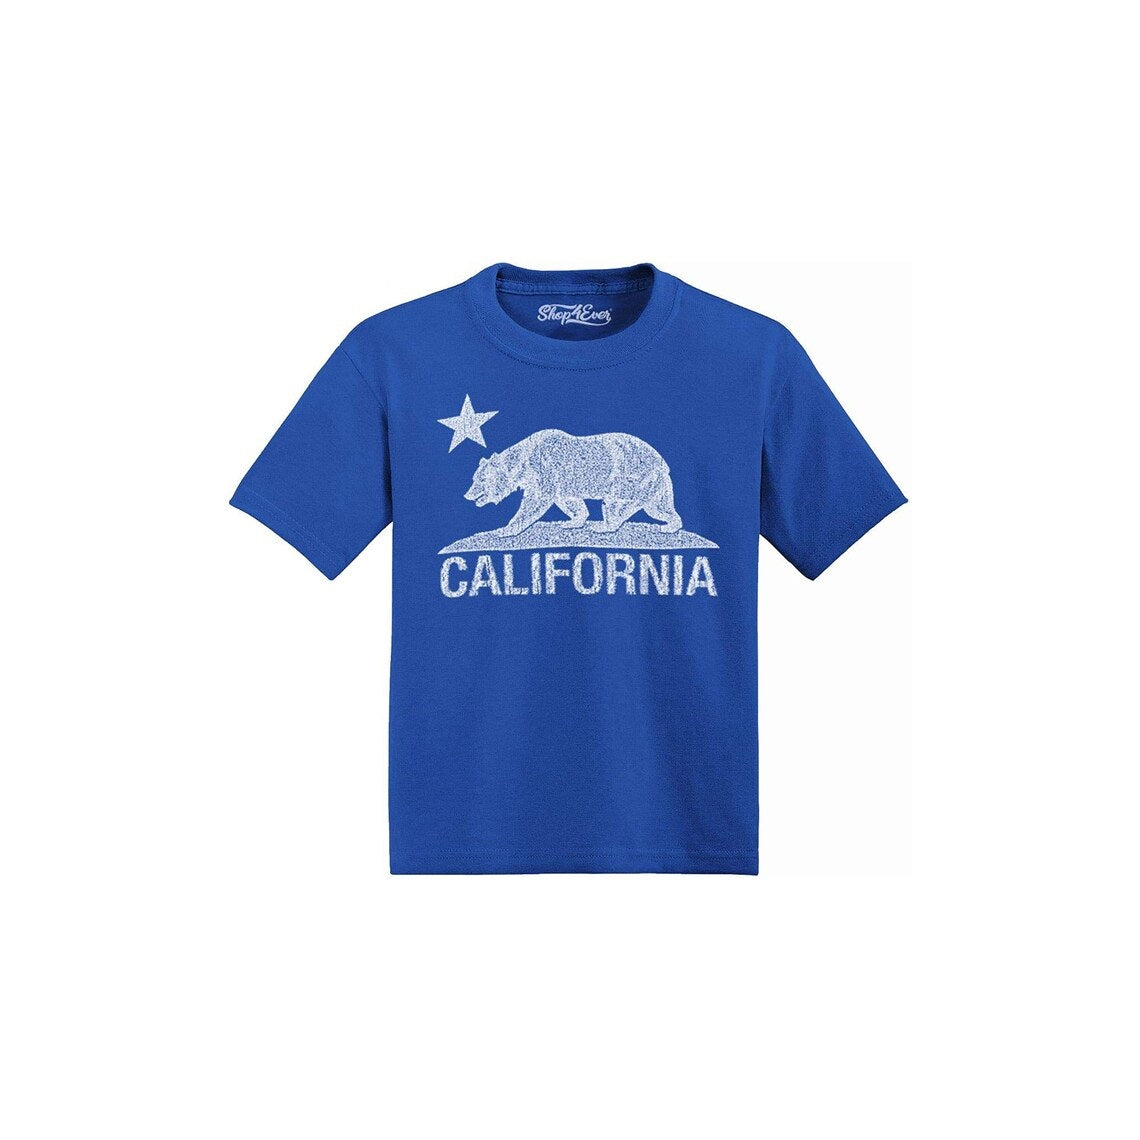 California Distressed Bear Toddler Cotton T-Shirt